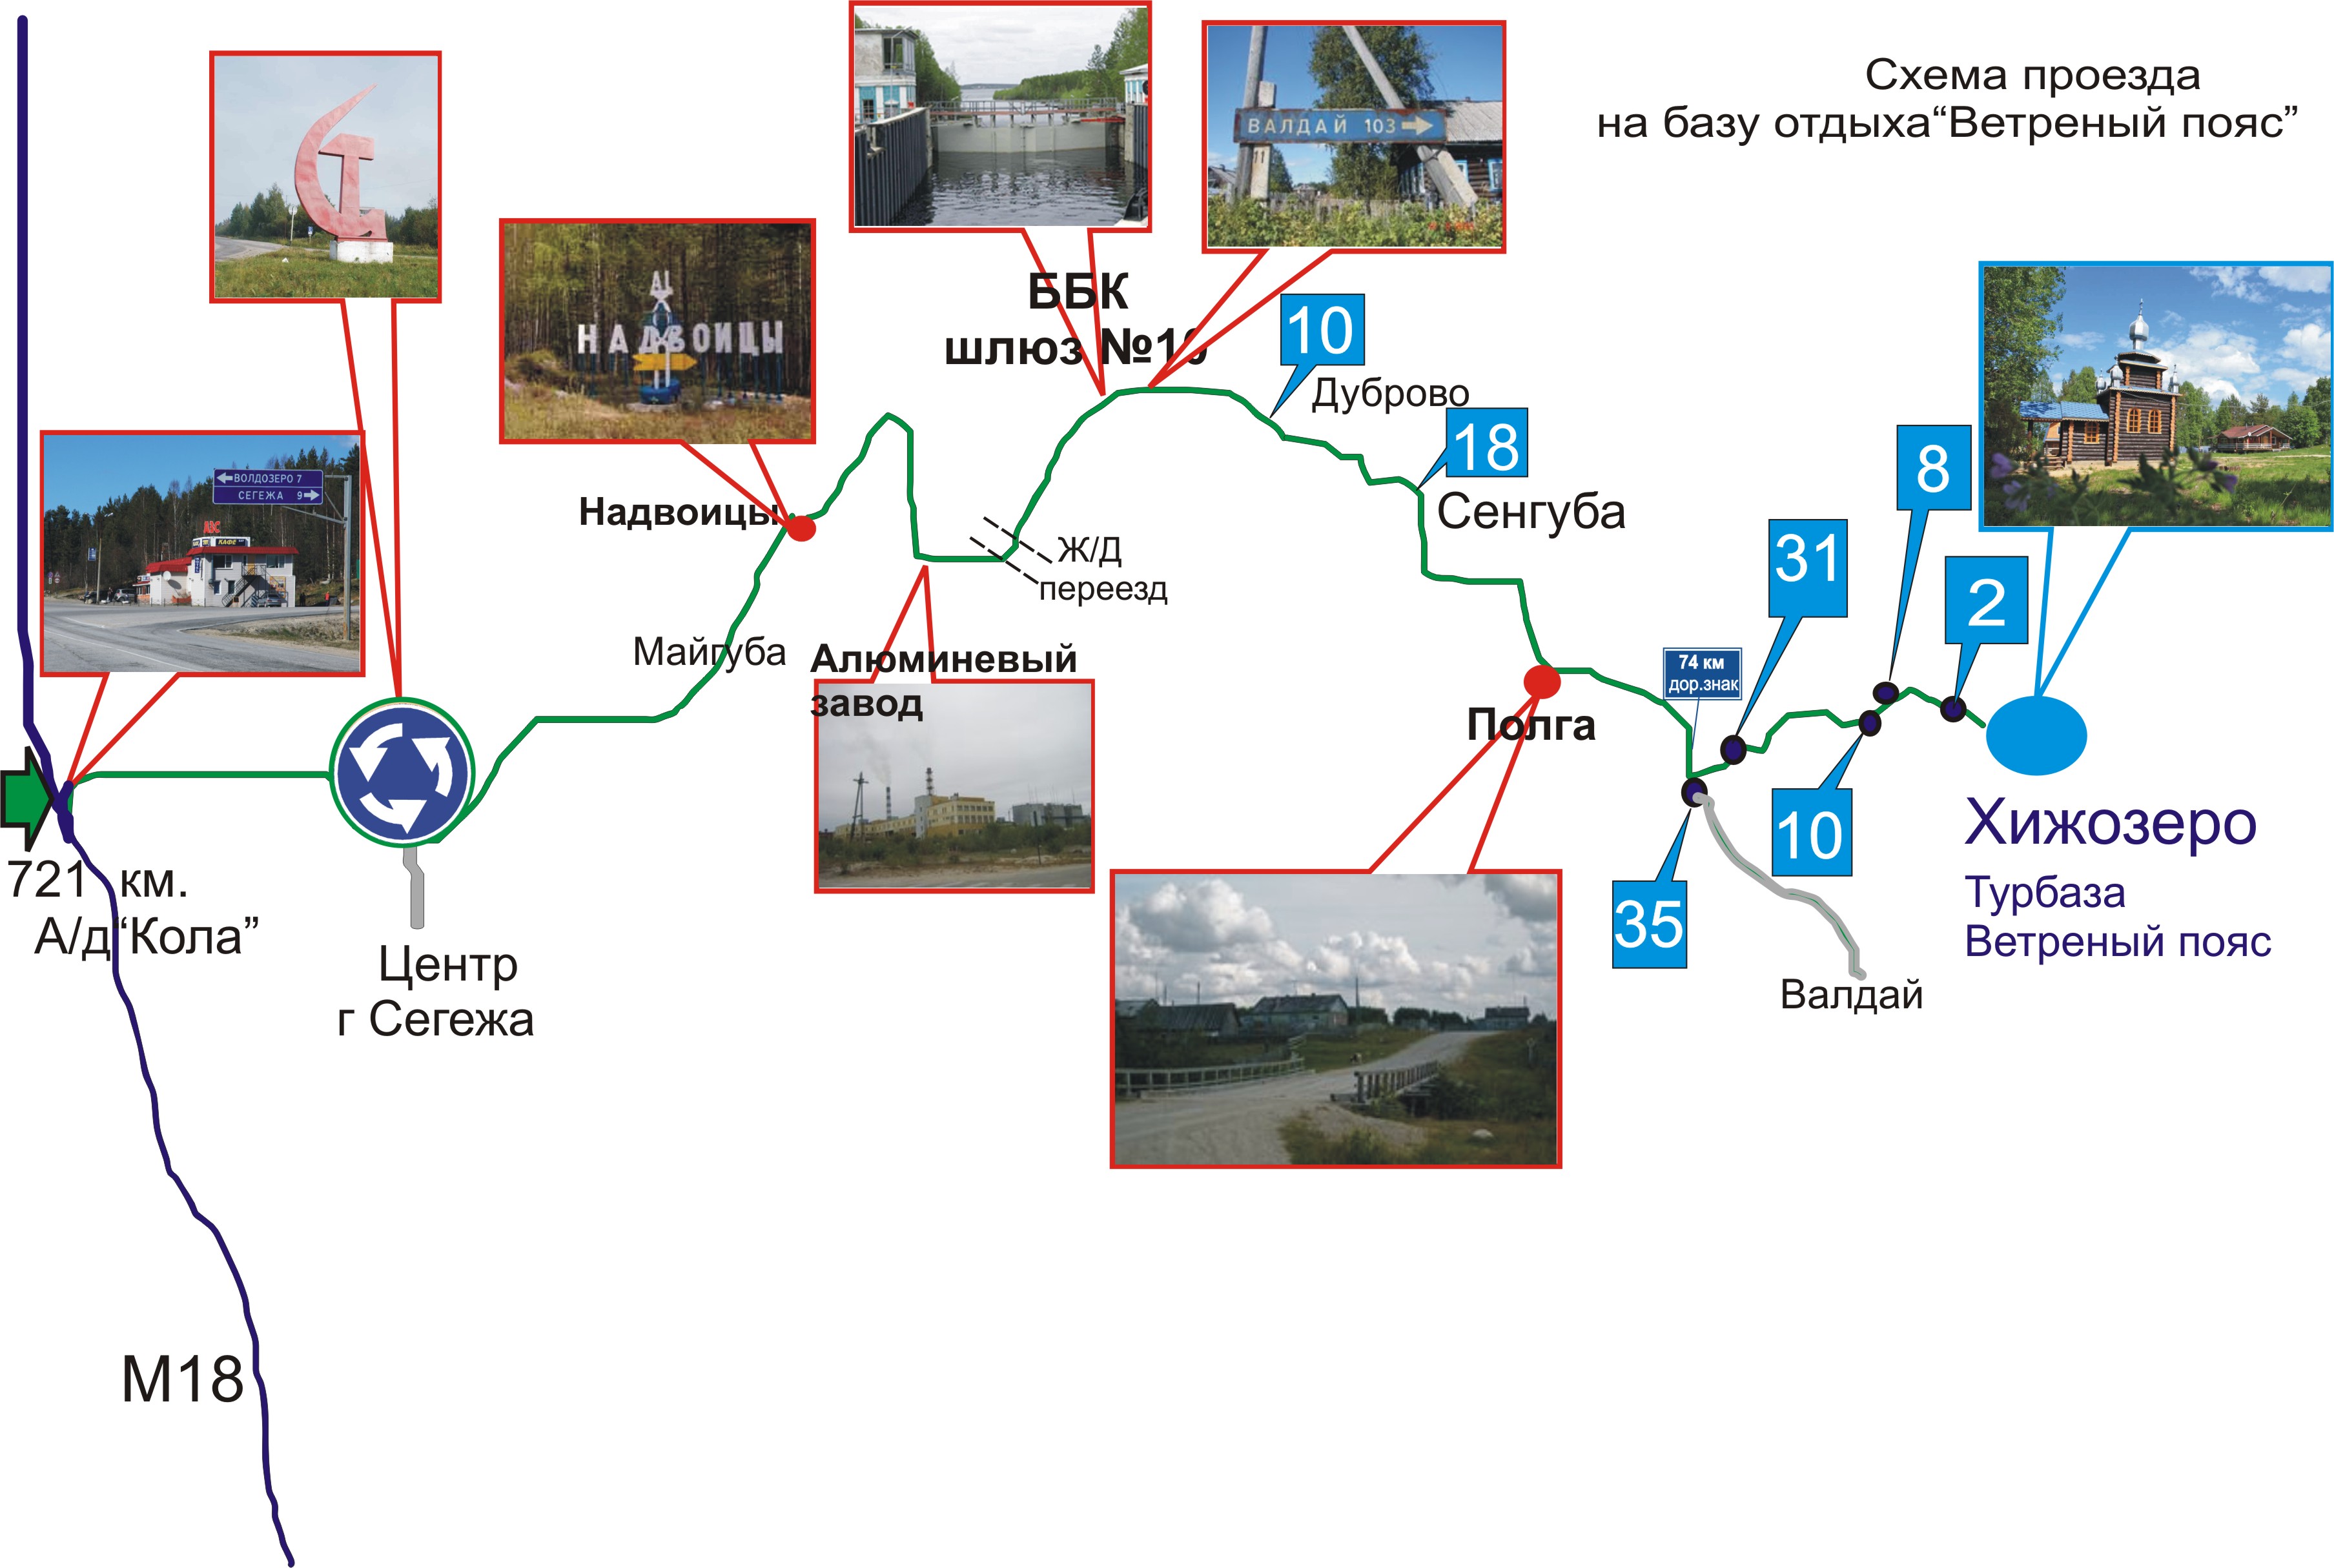 Схема проезда с развязами и километражом